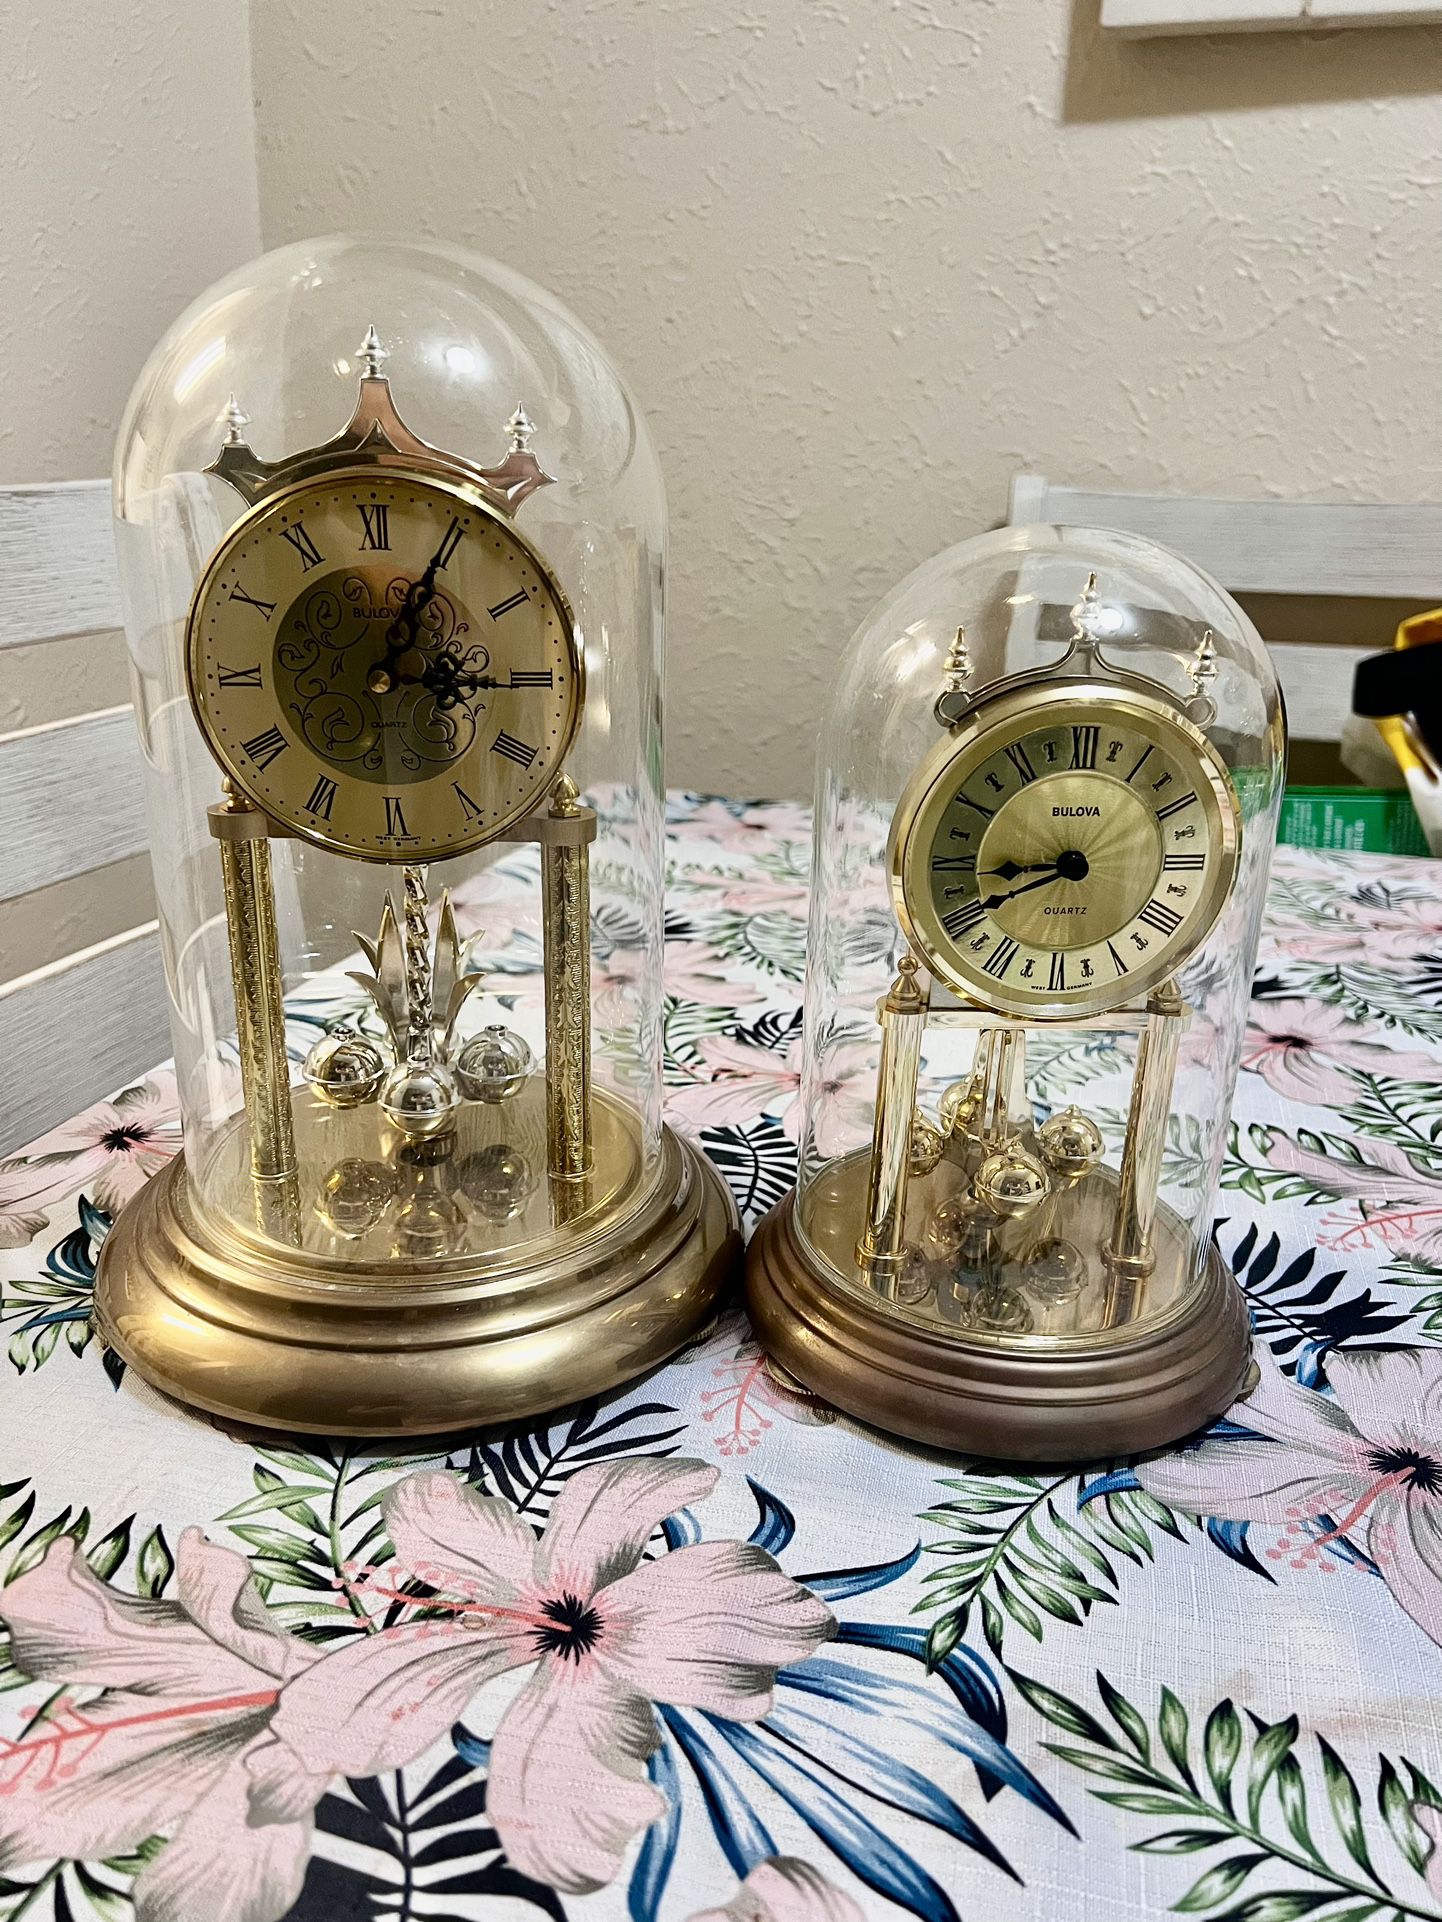 Elgin Vintage Clocks/mercari 25$ For Each 